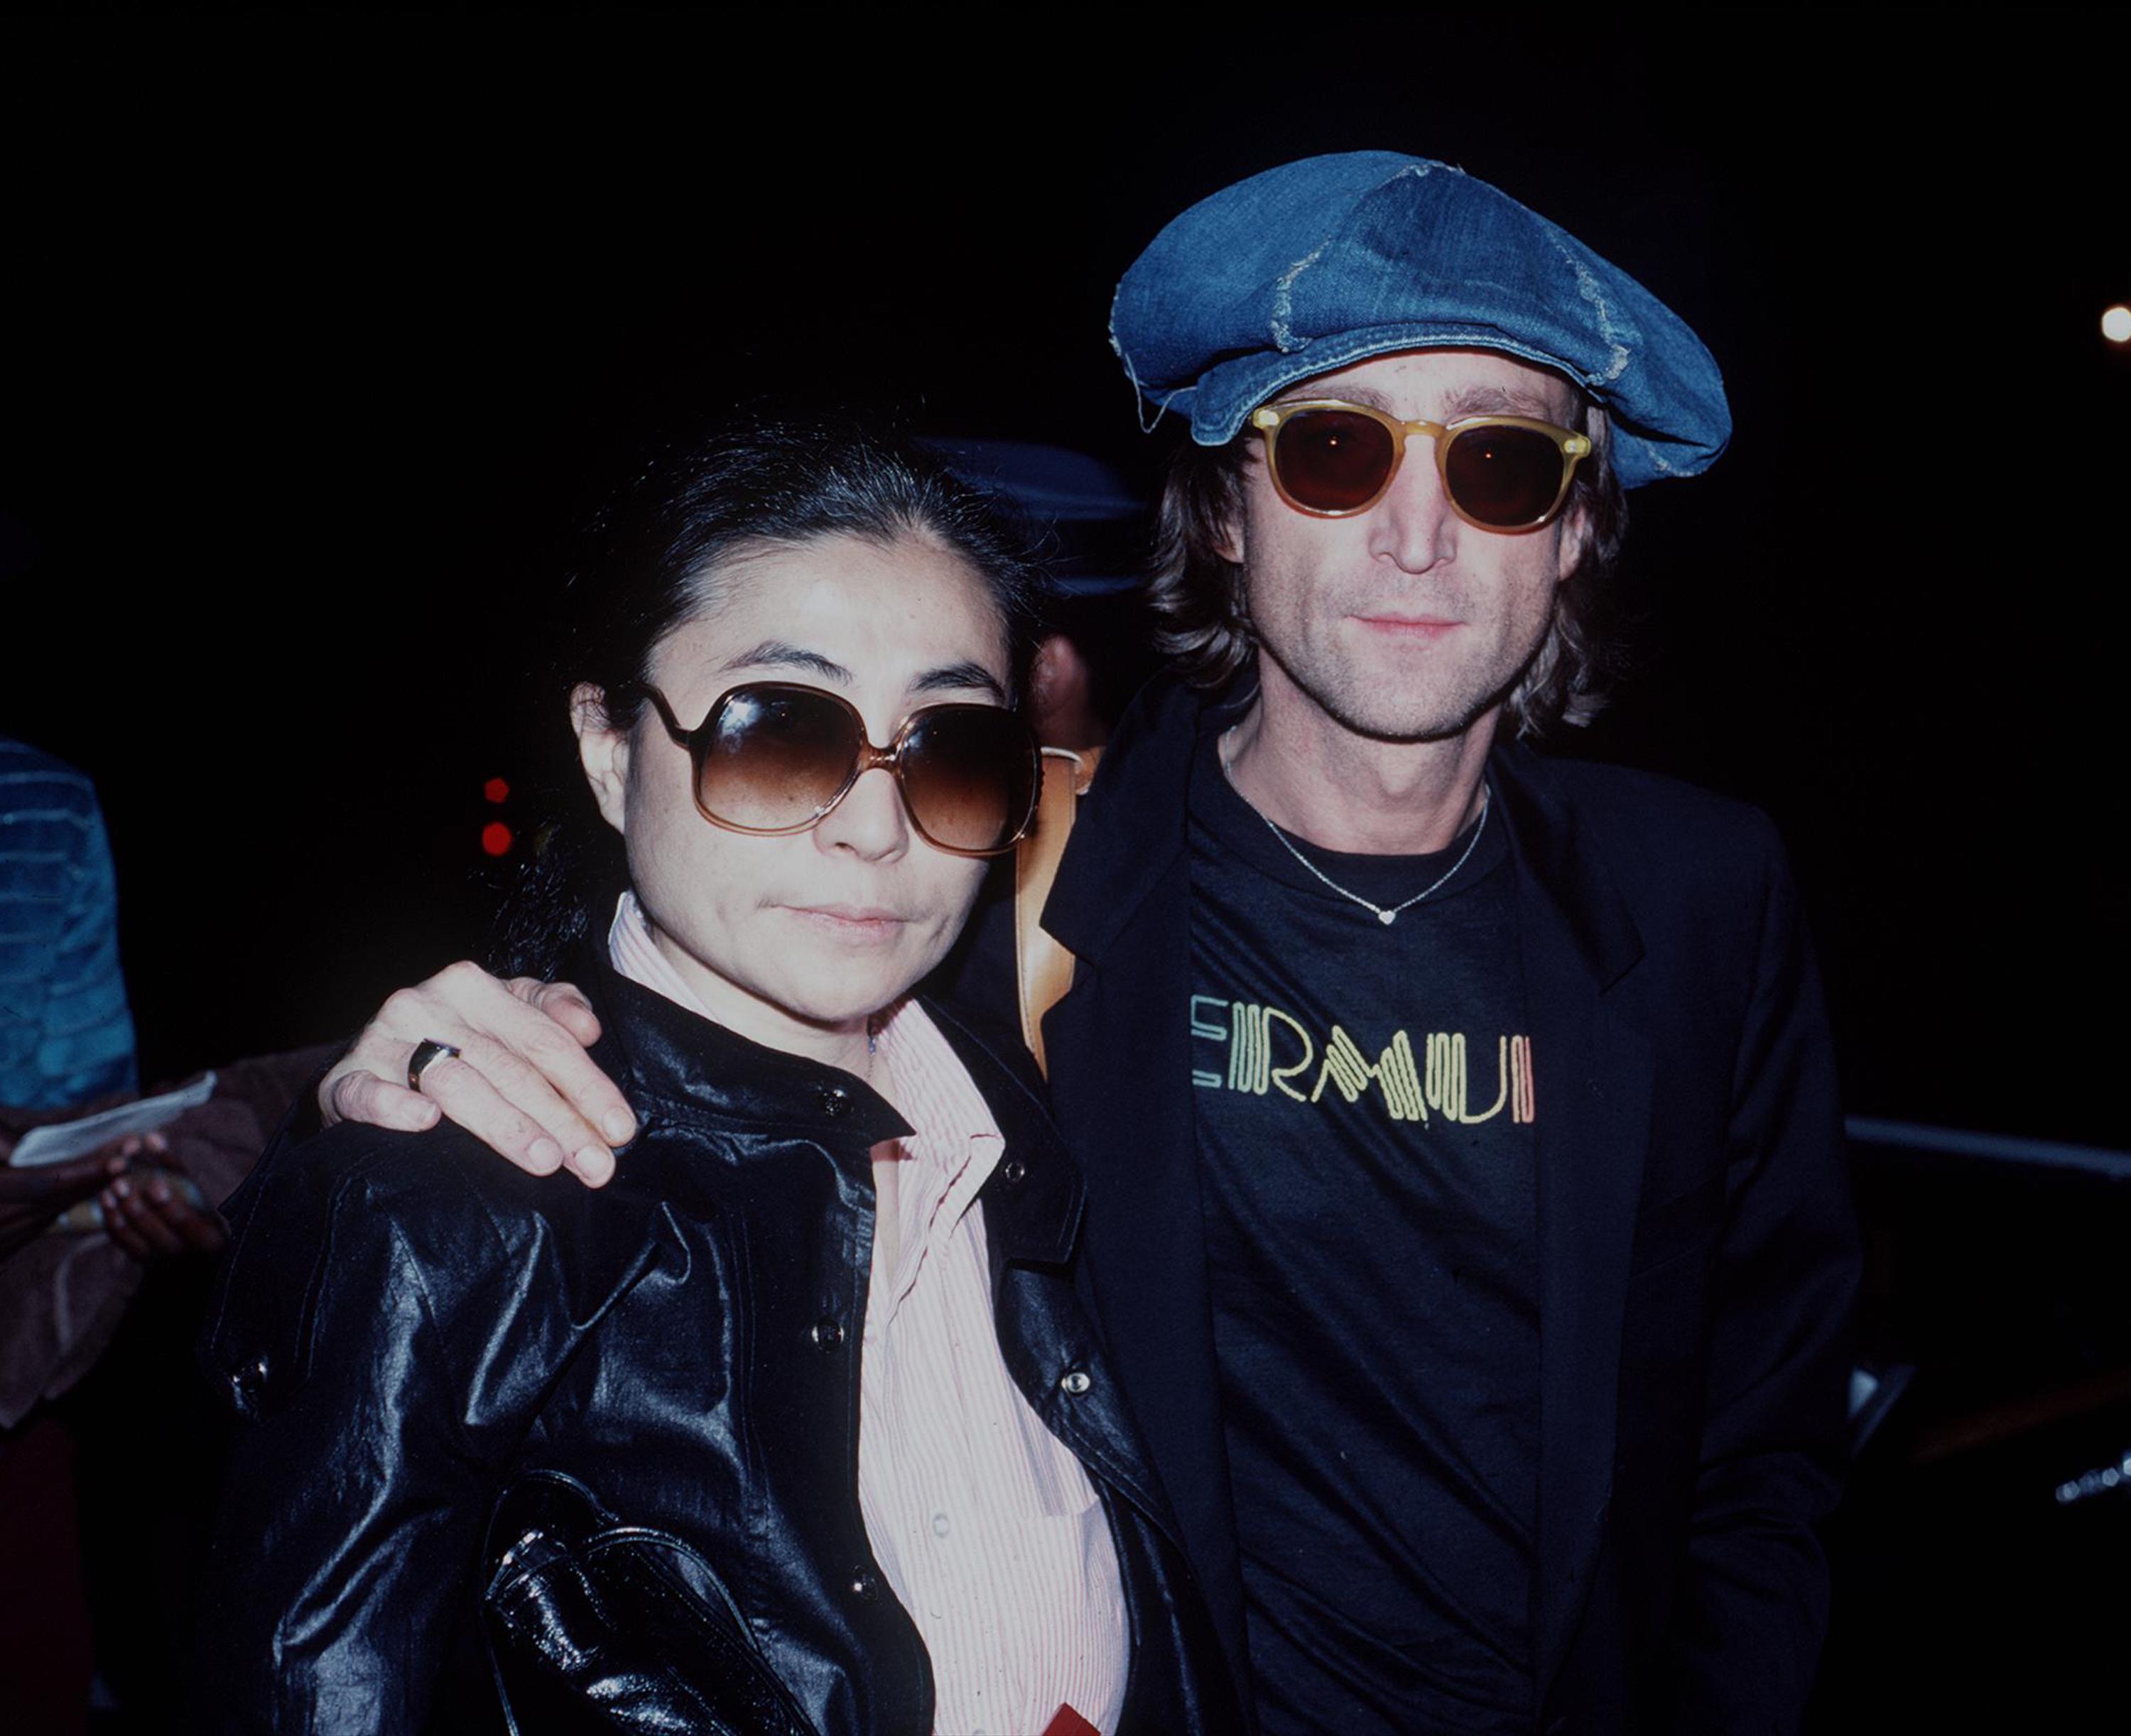 John Lennon & Yoko Ono, kurz bevor John erschossen wird in New York im Dezember 1980. (Photo by Brenda Chase/Newsmakers)